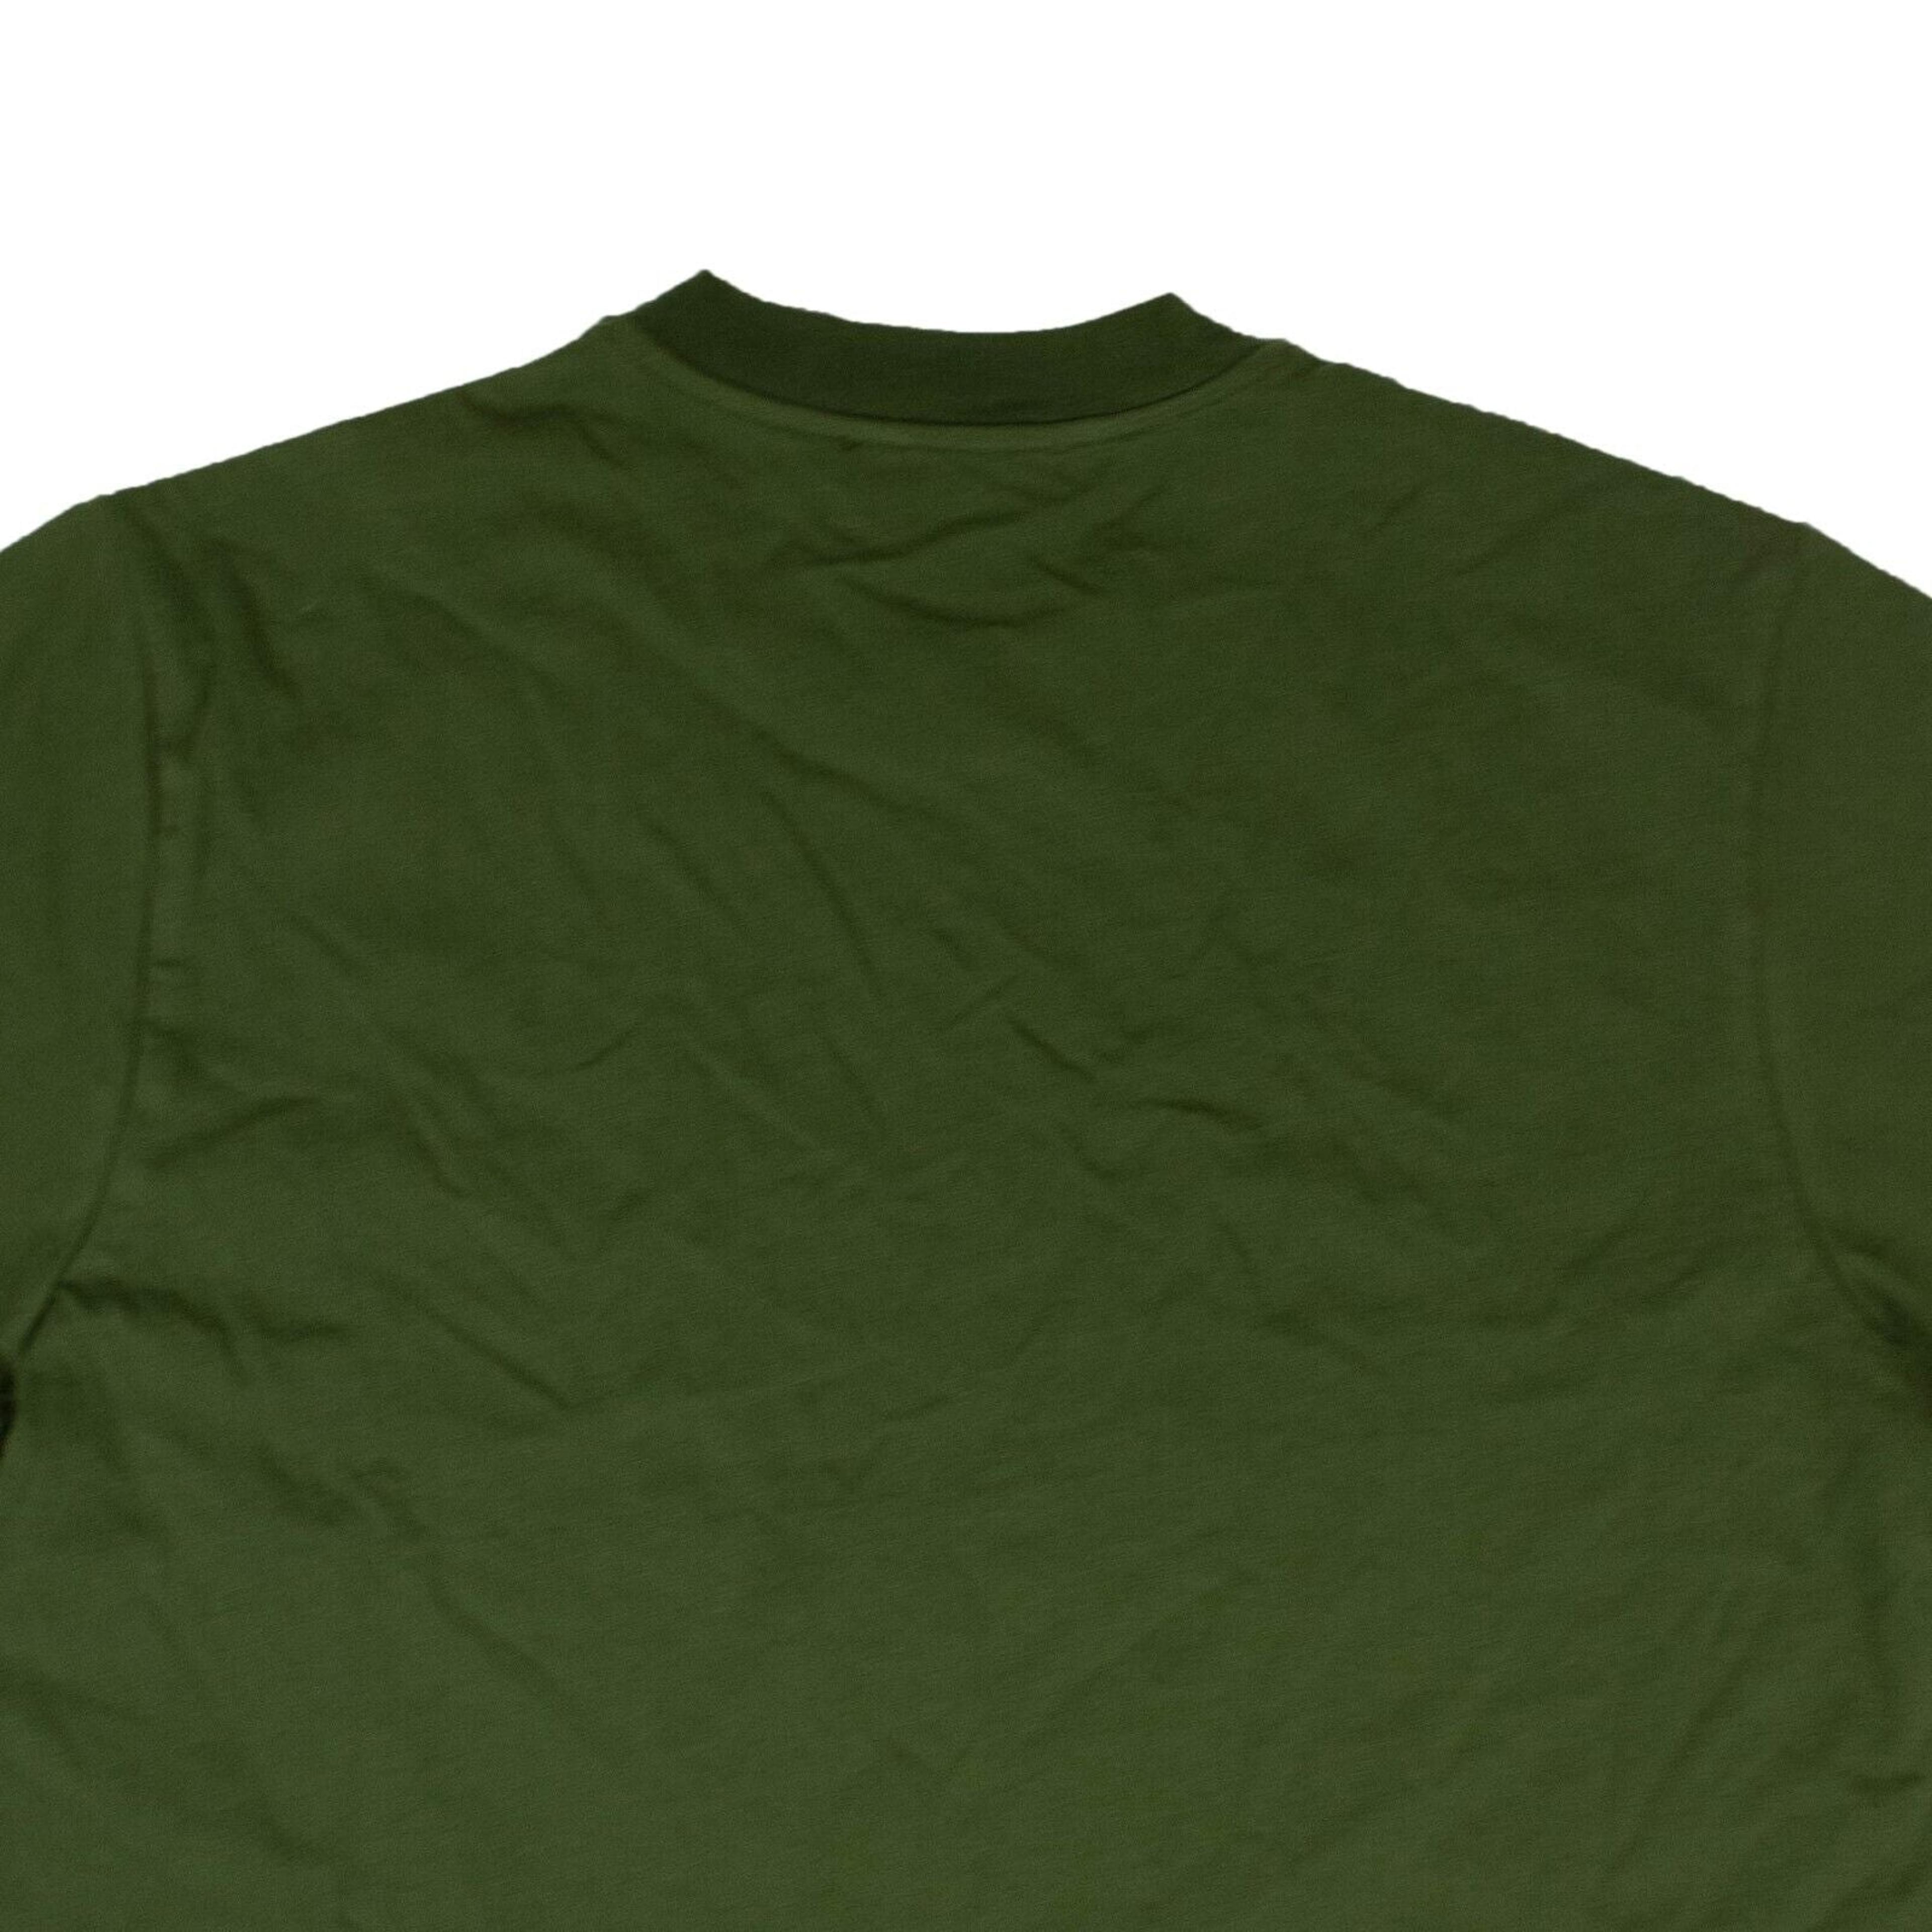 Alternate View 9 of Men'S T-Shirts - Green/White